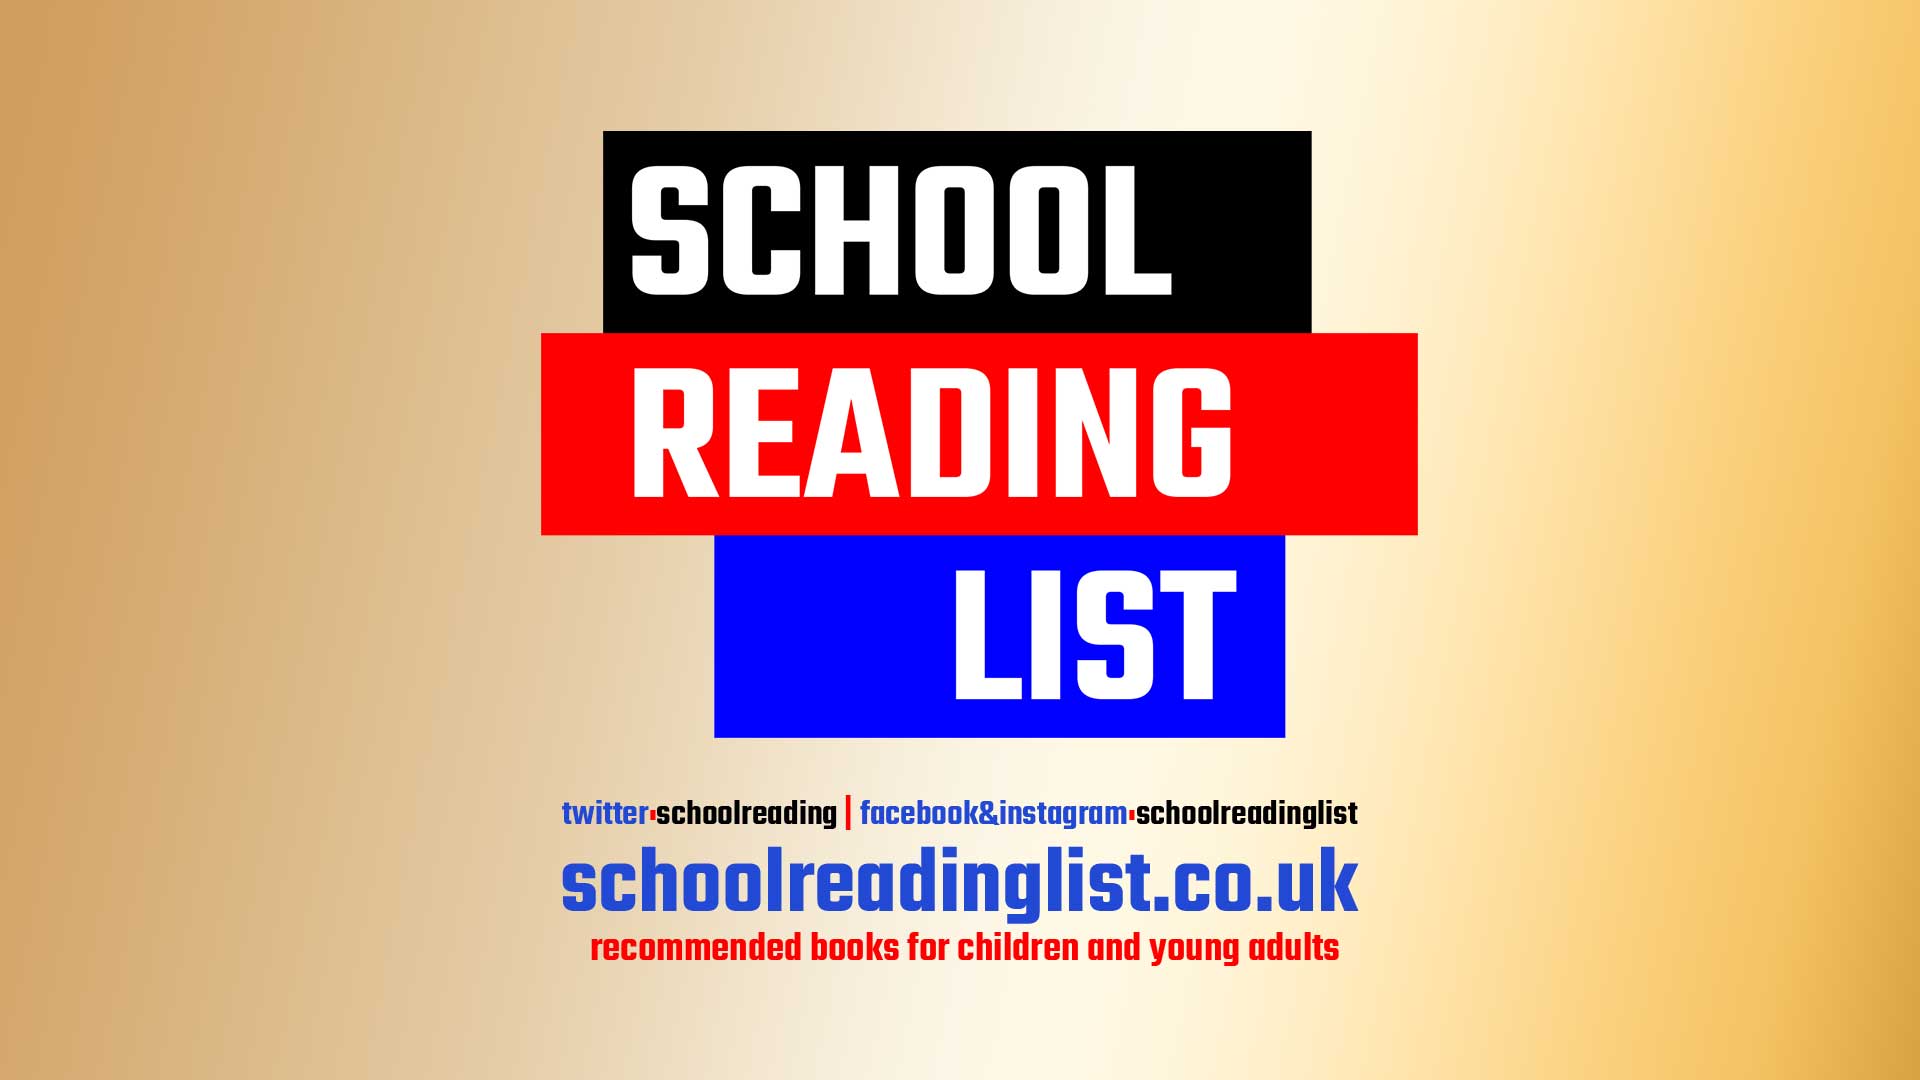 The School Reading List website masthead